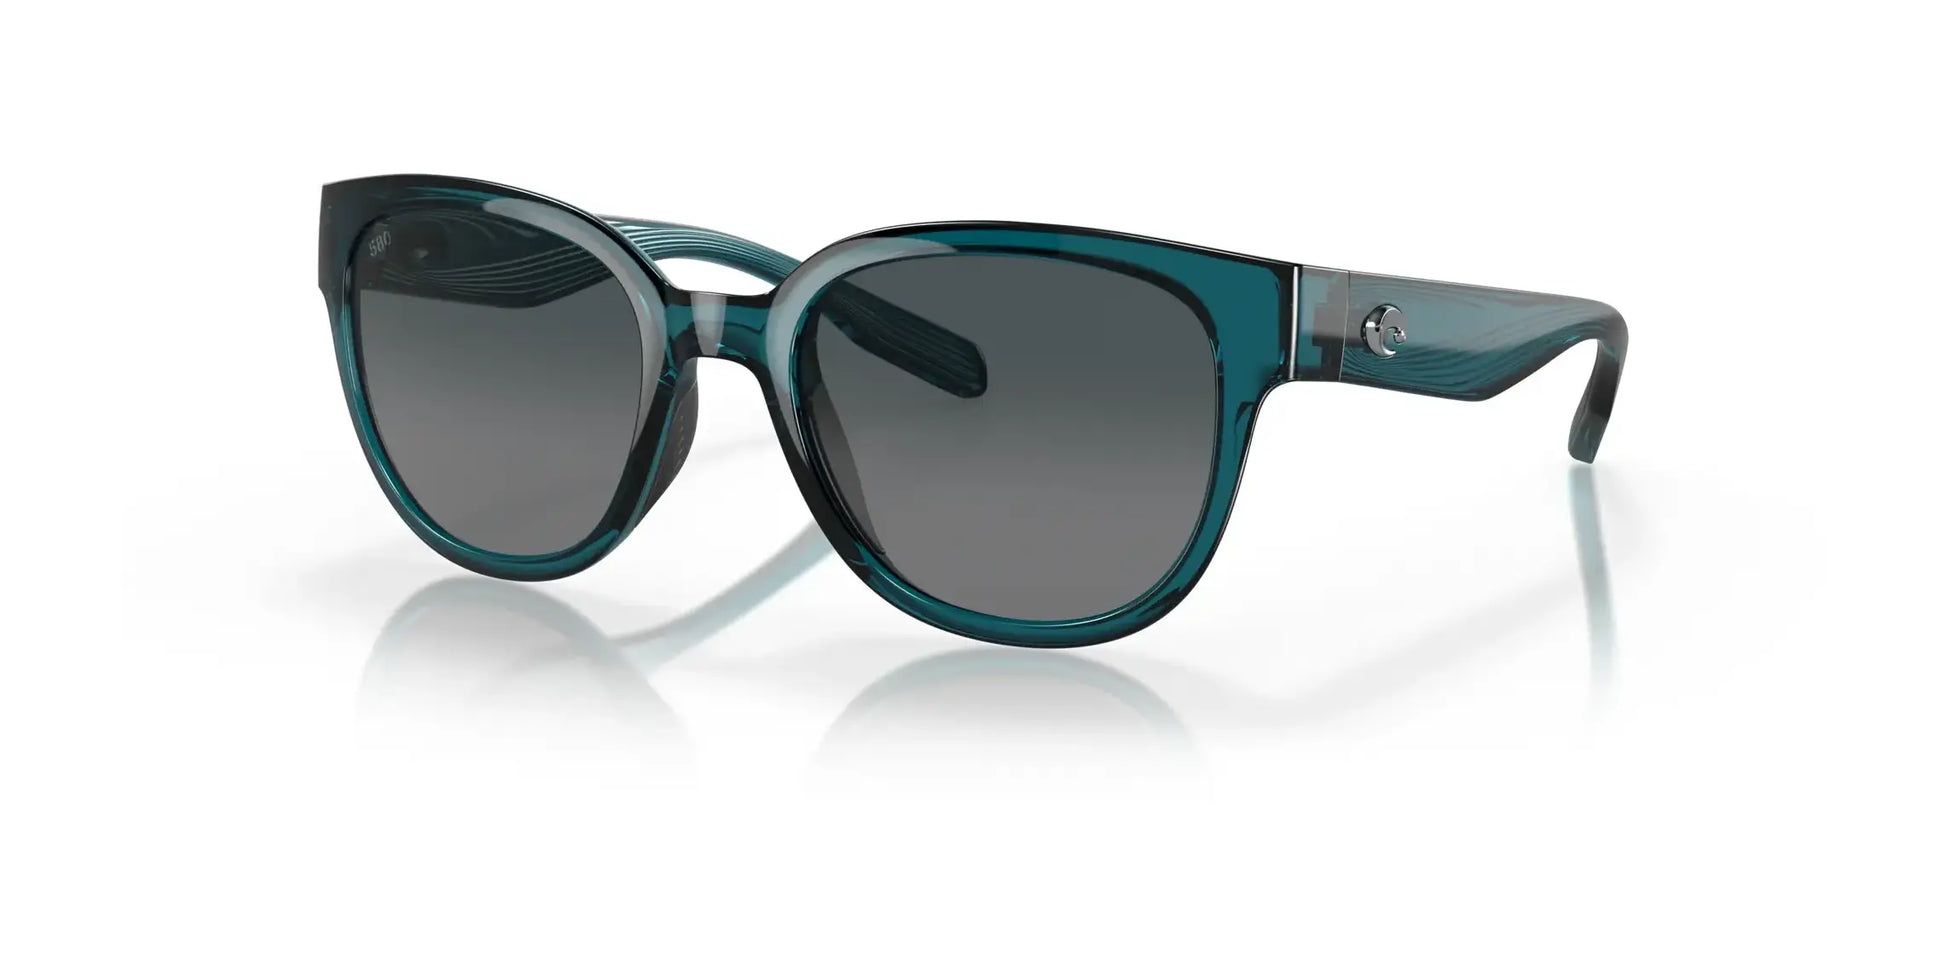 Costa SALINA 6S9051 Sunglasses Teal / Gray Gradient